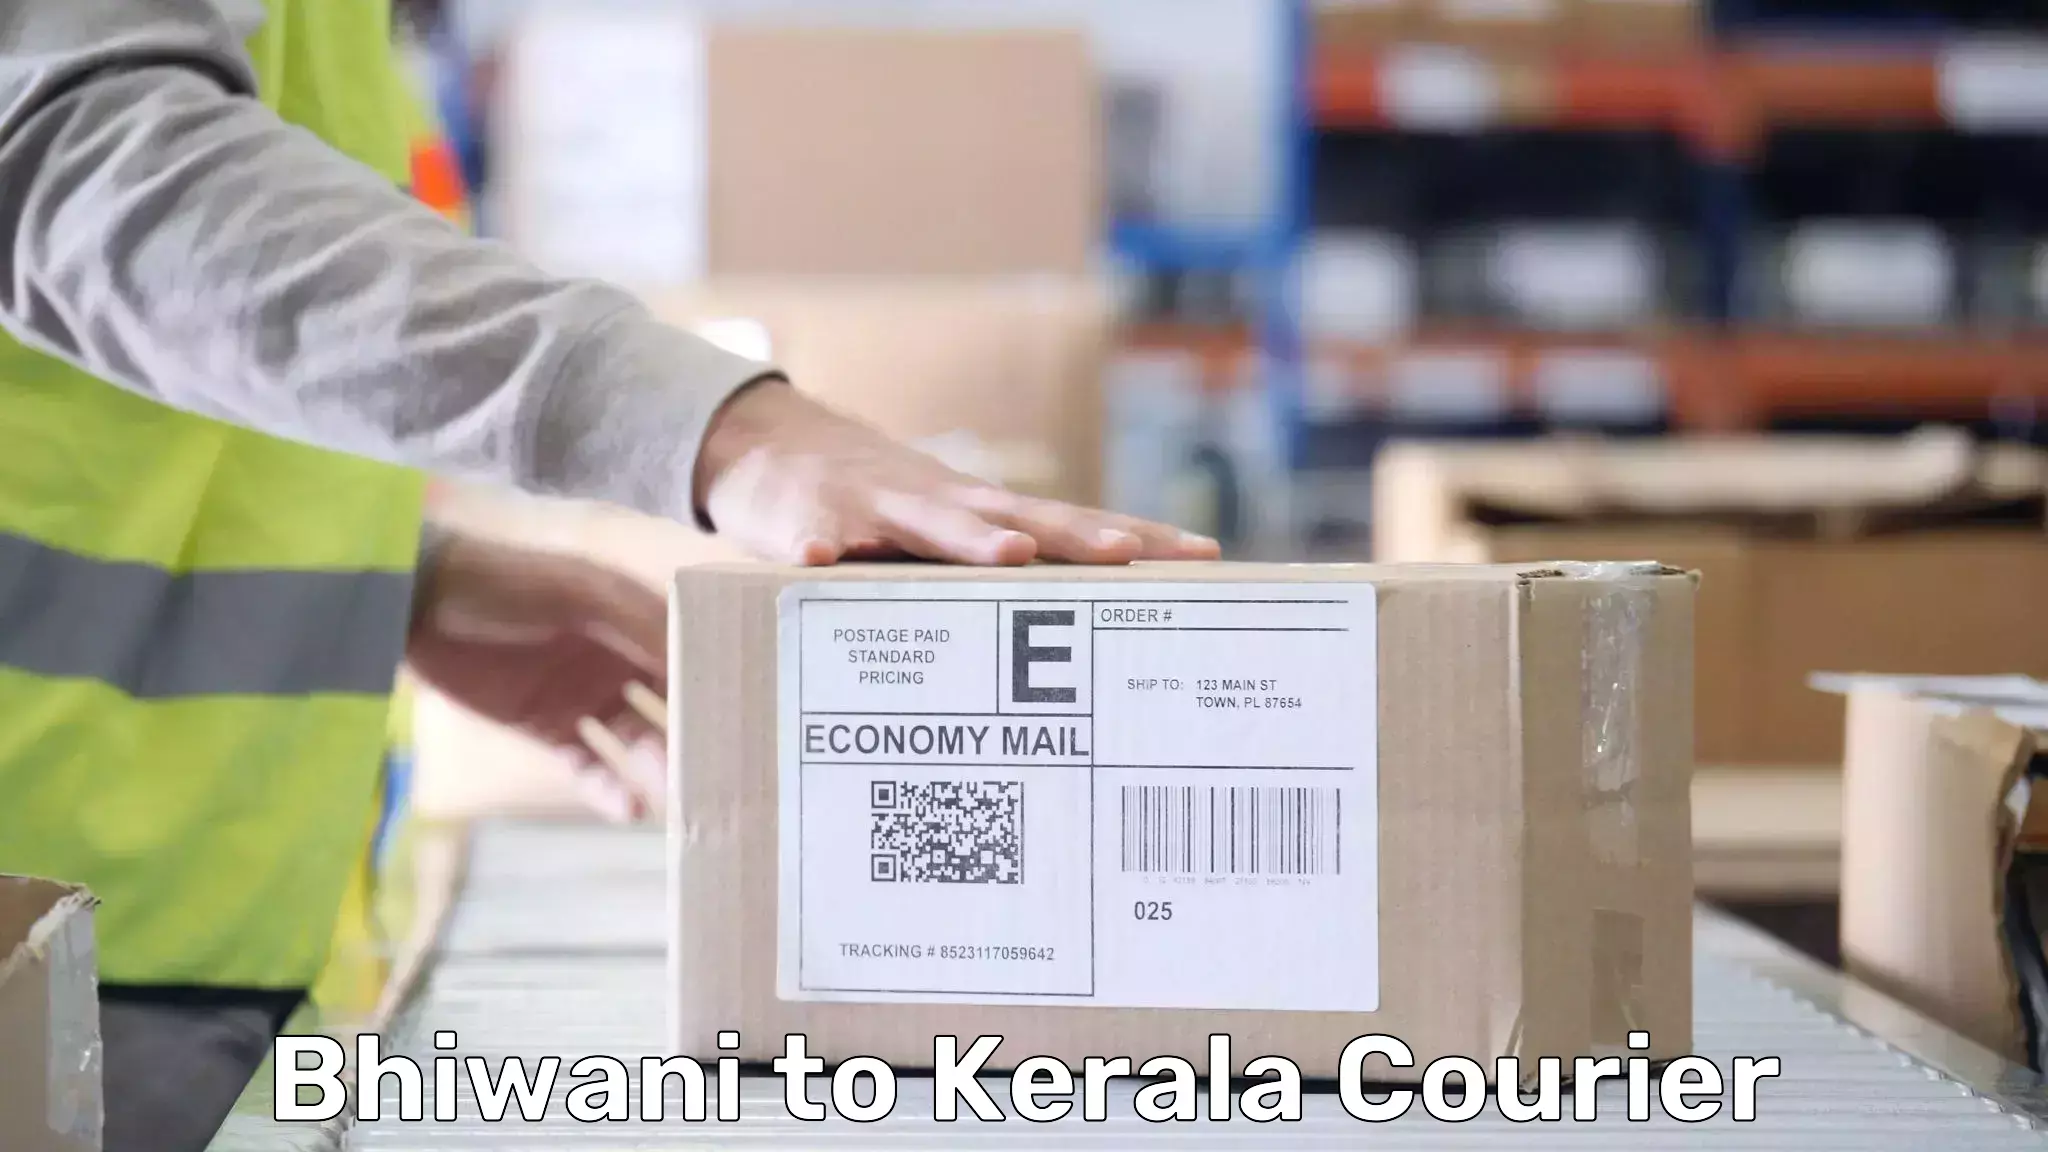 Luggage shipment specialists Bhiwani to Kerala